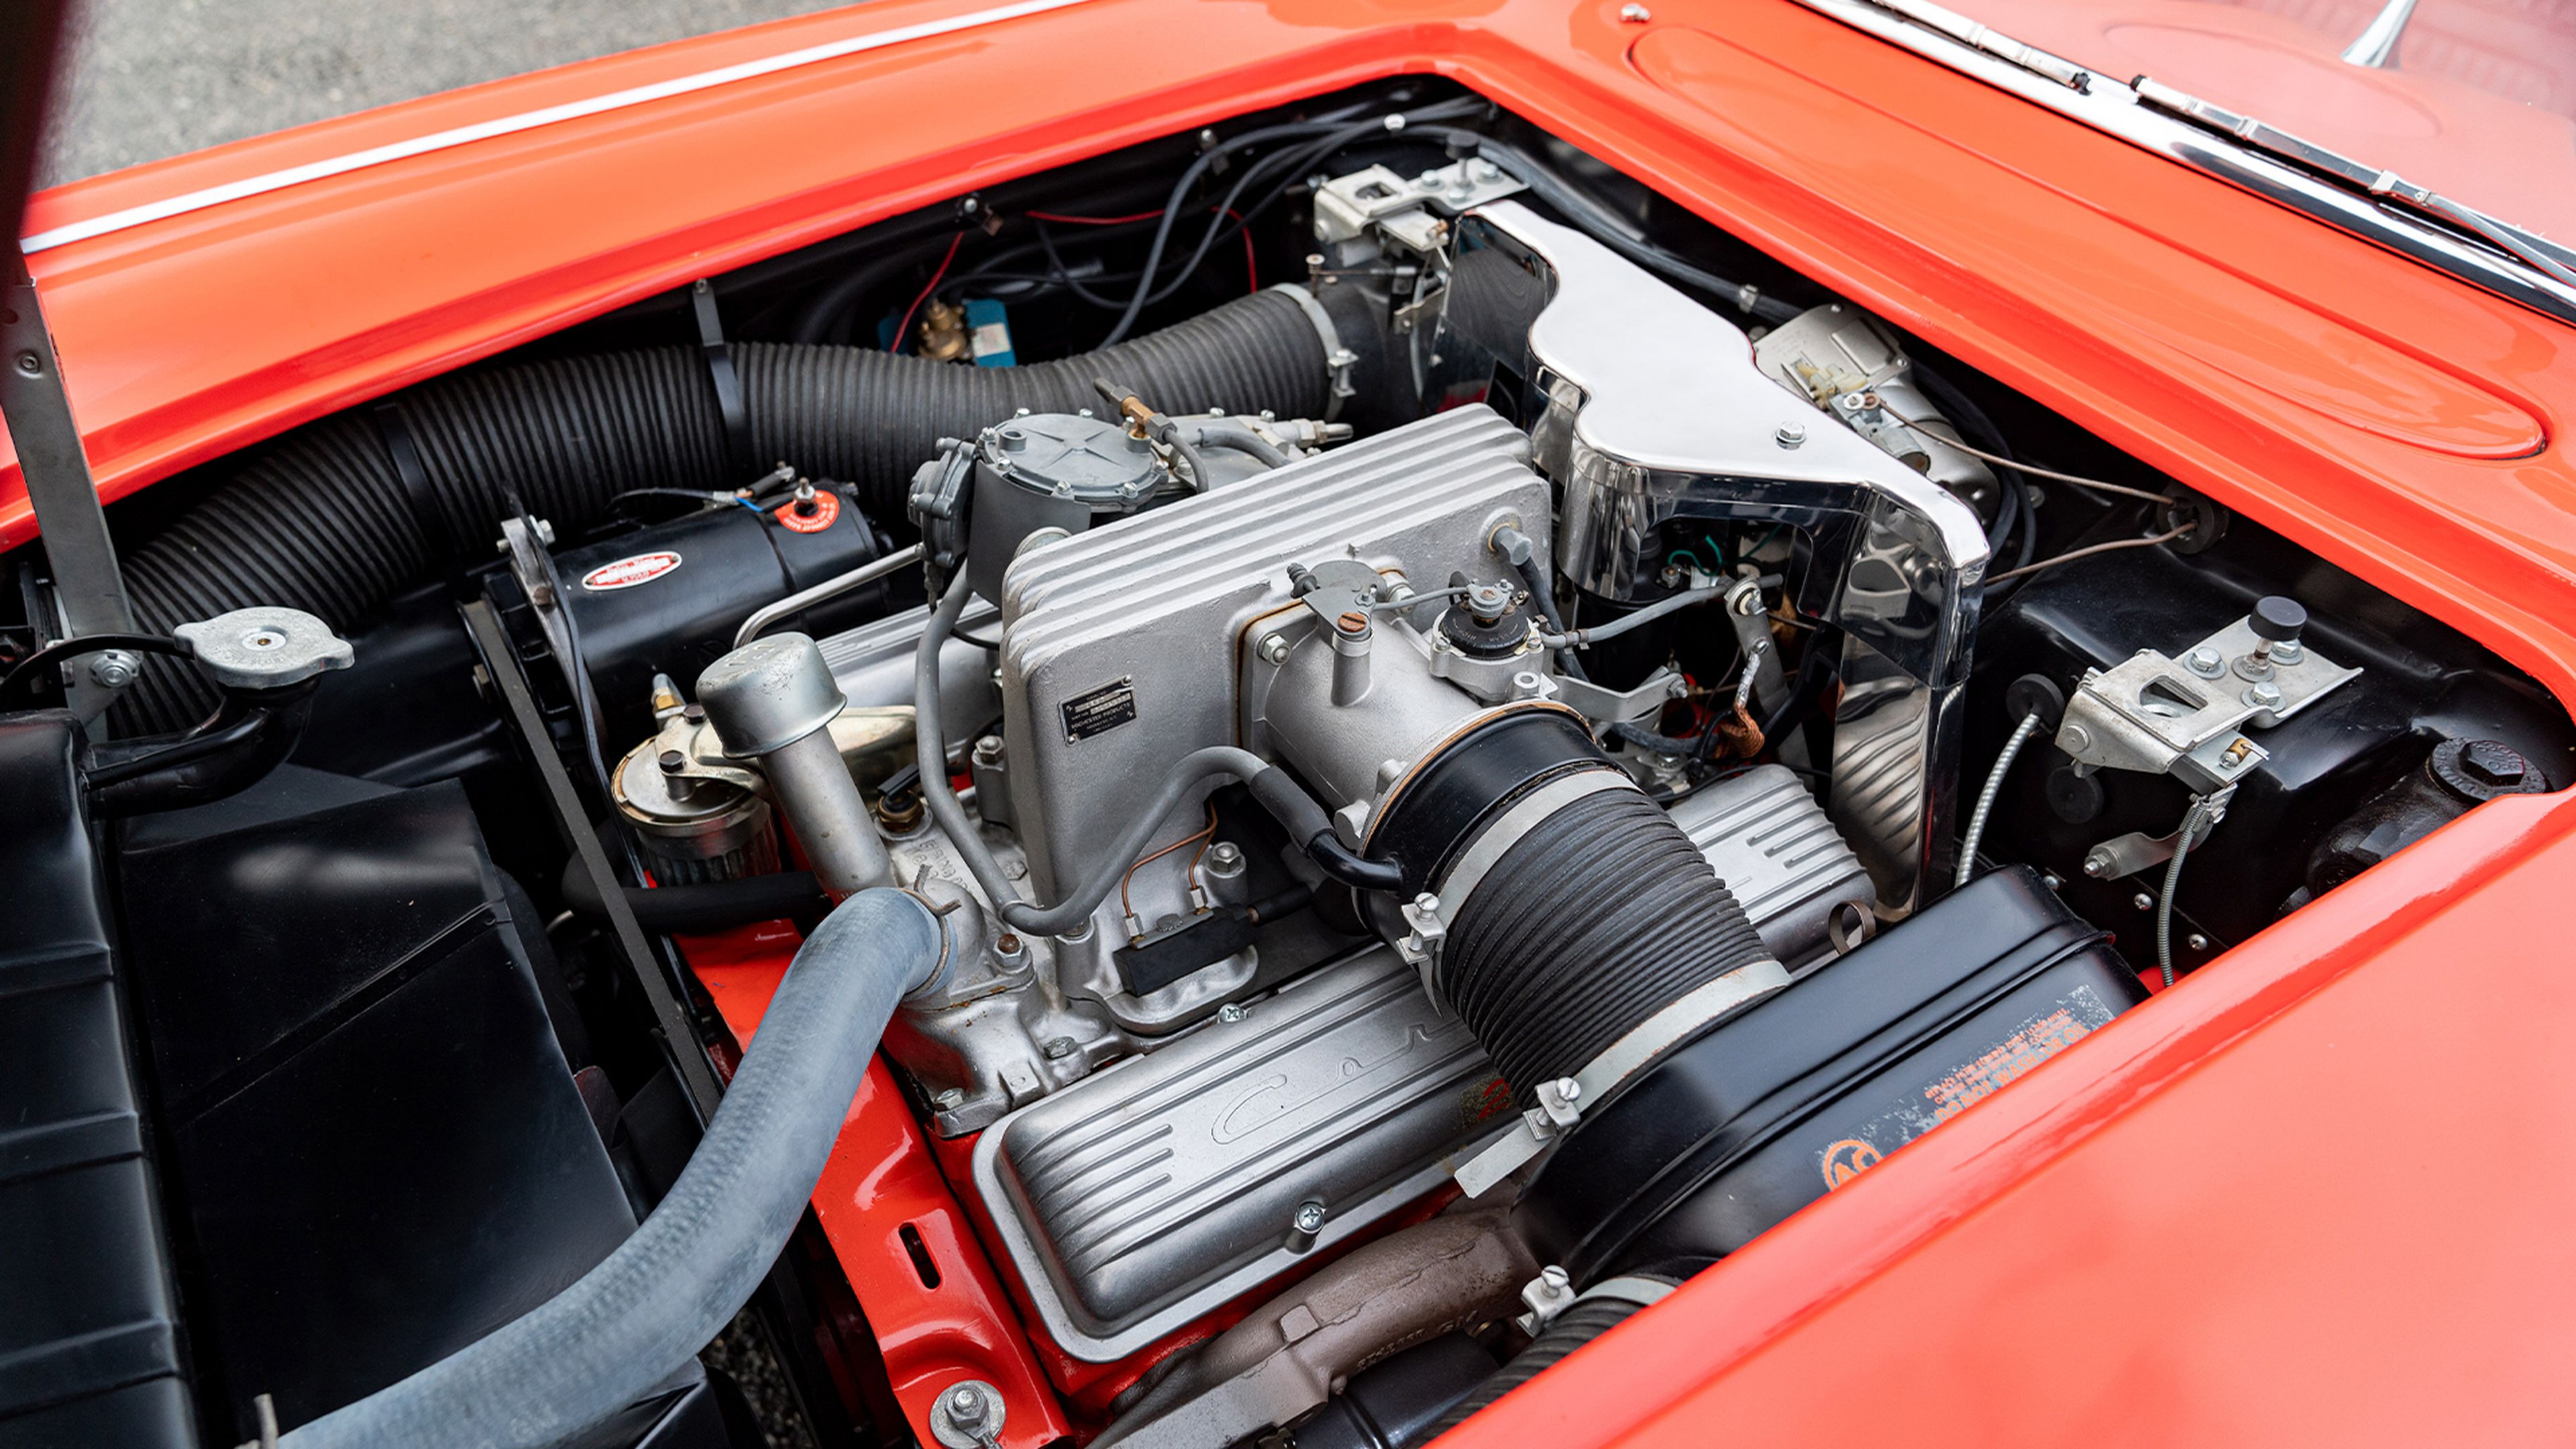 Motor del Chevrolet Corvette Fuel Injected